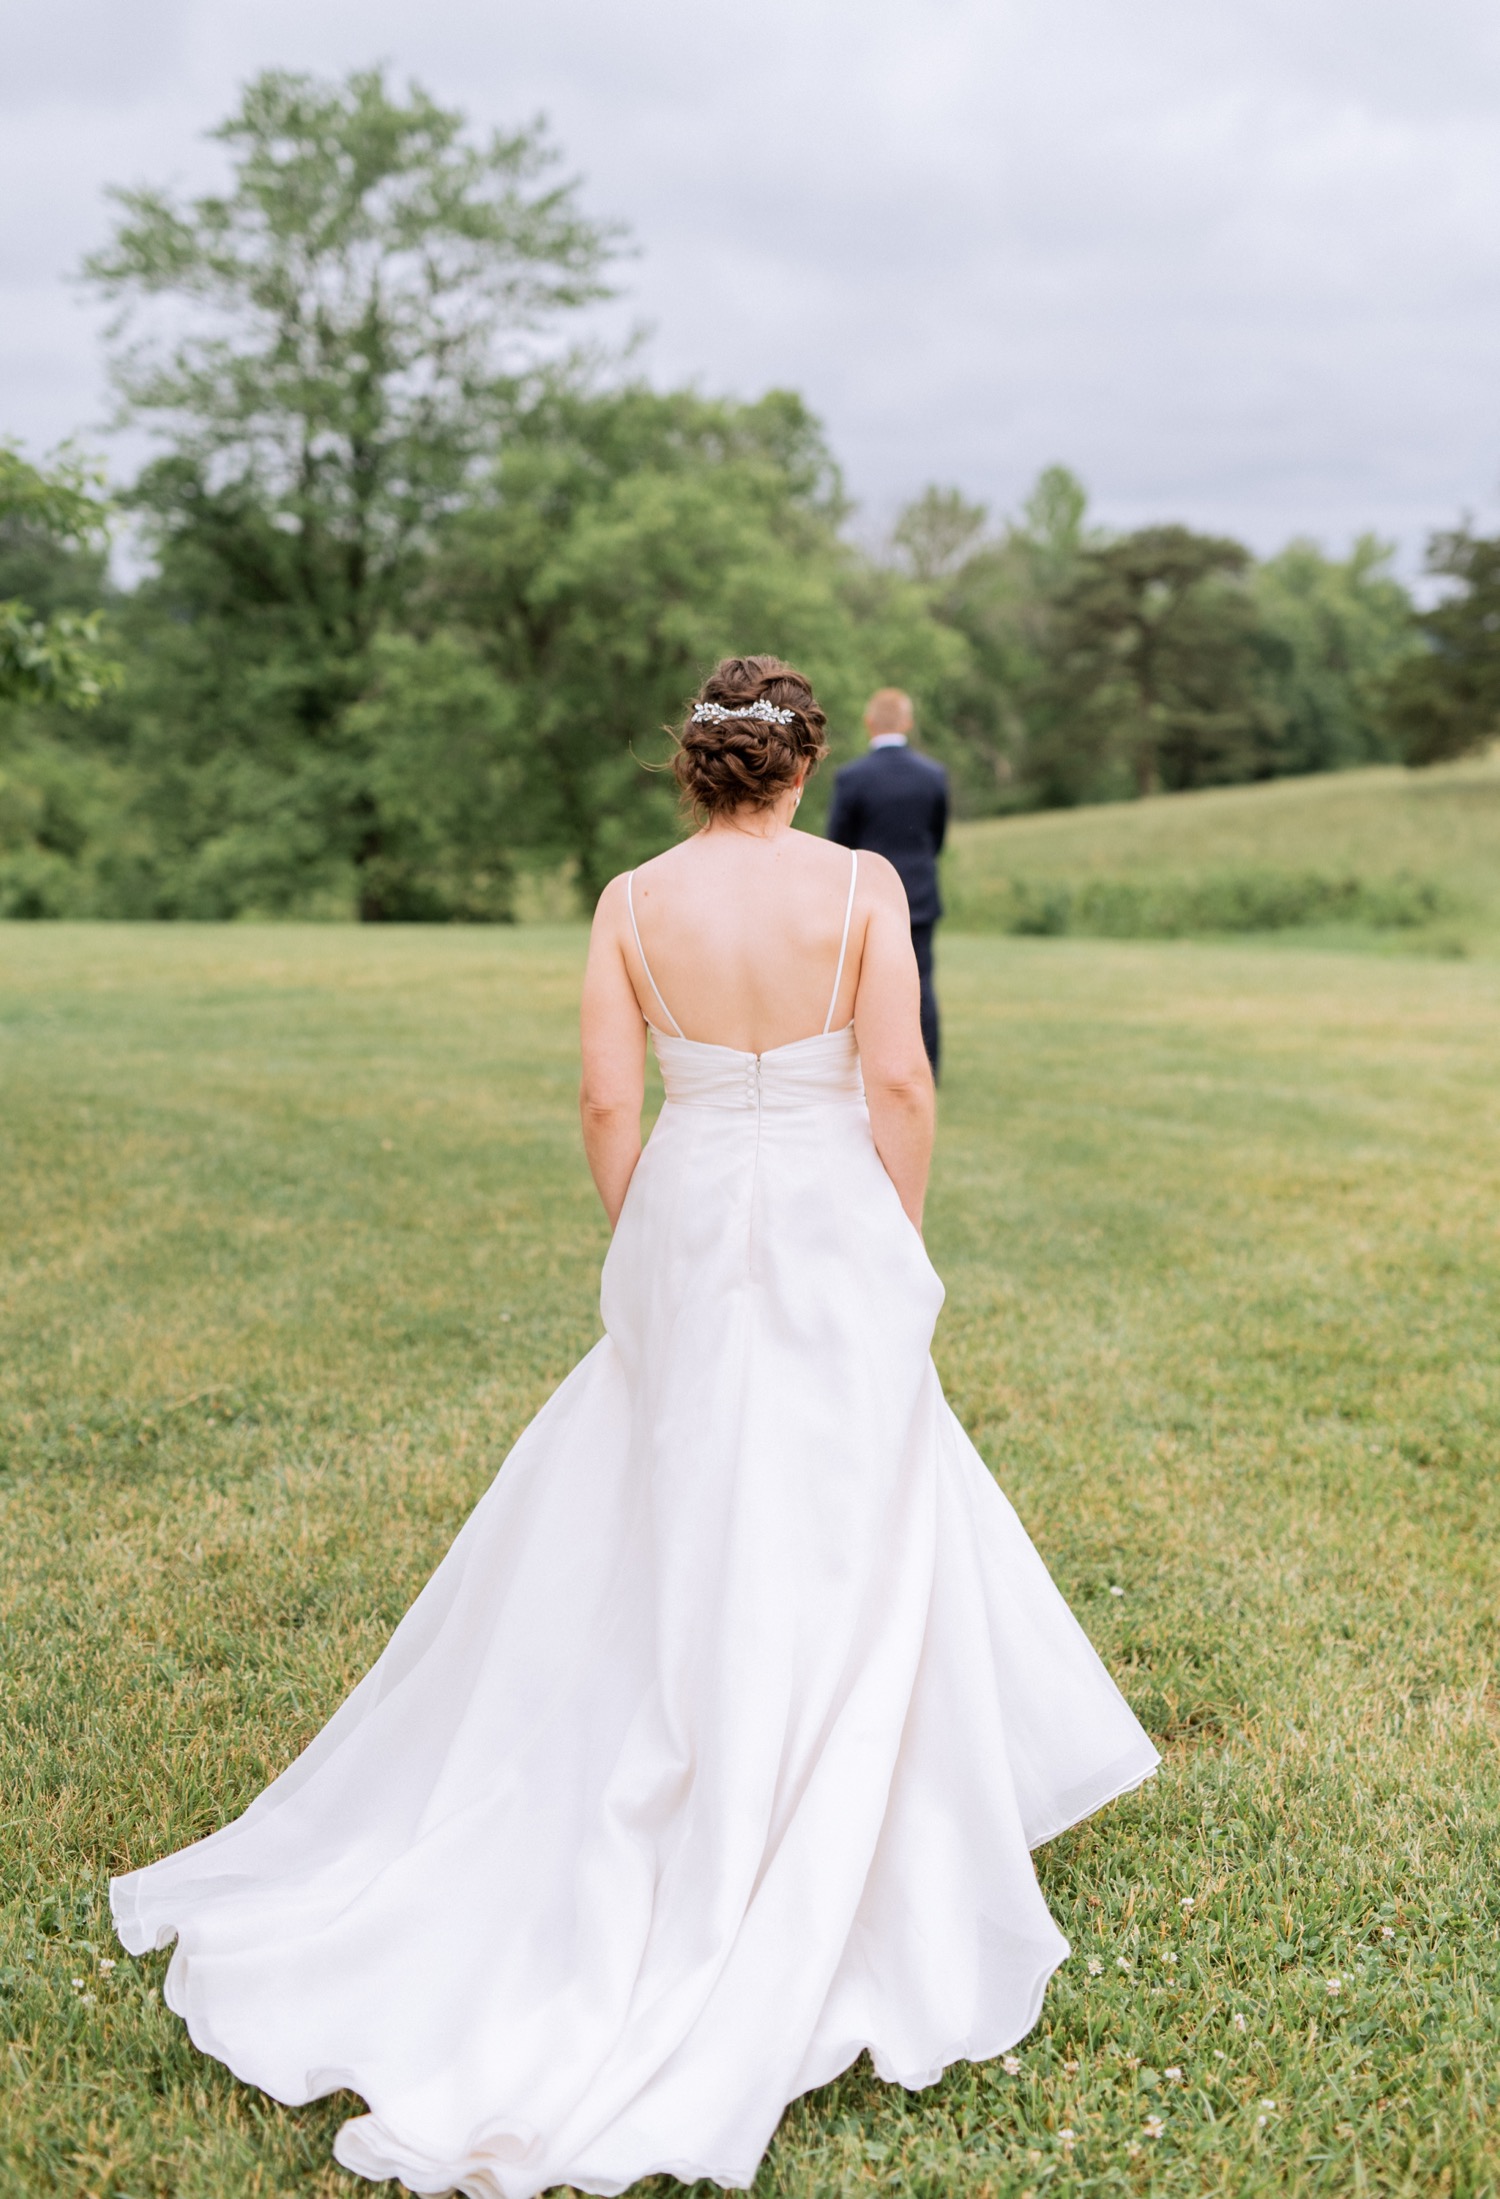 first look between bride and groom before wedding ceremony in Charlottesville, VA